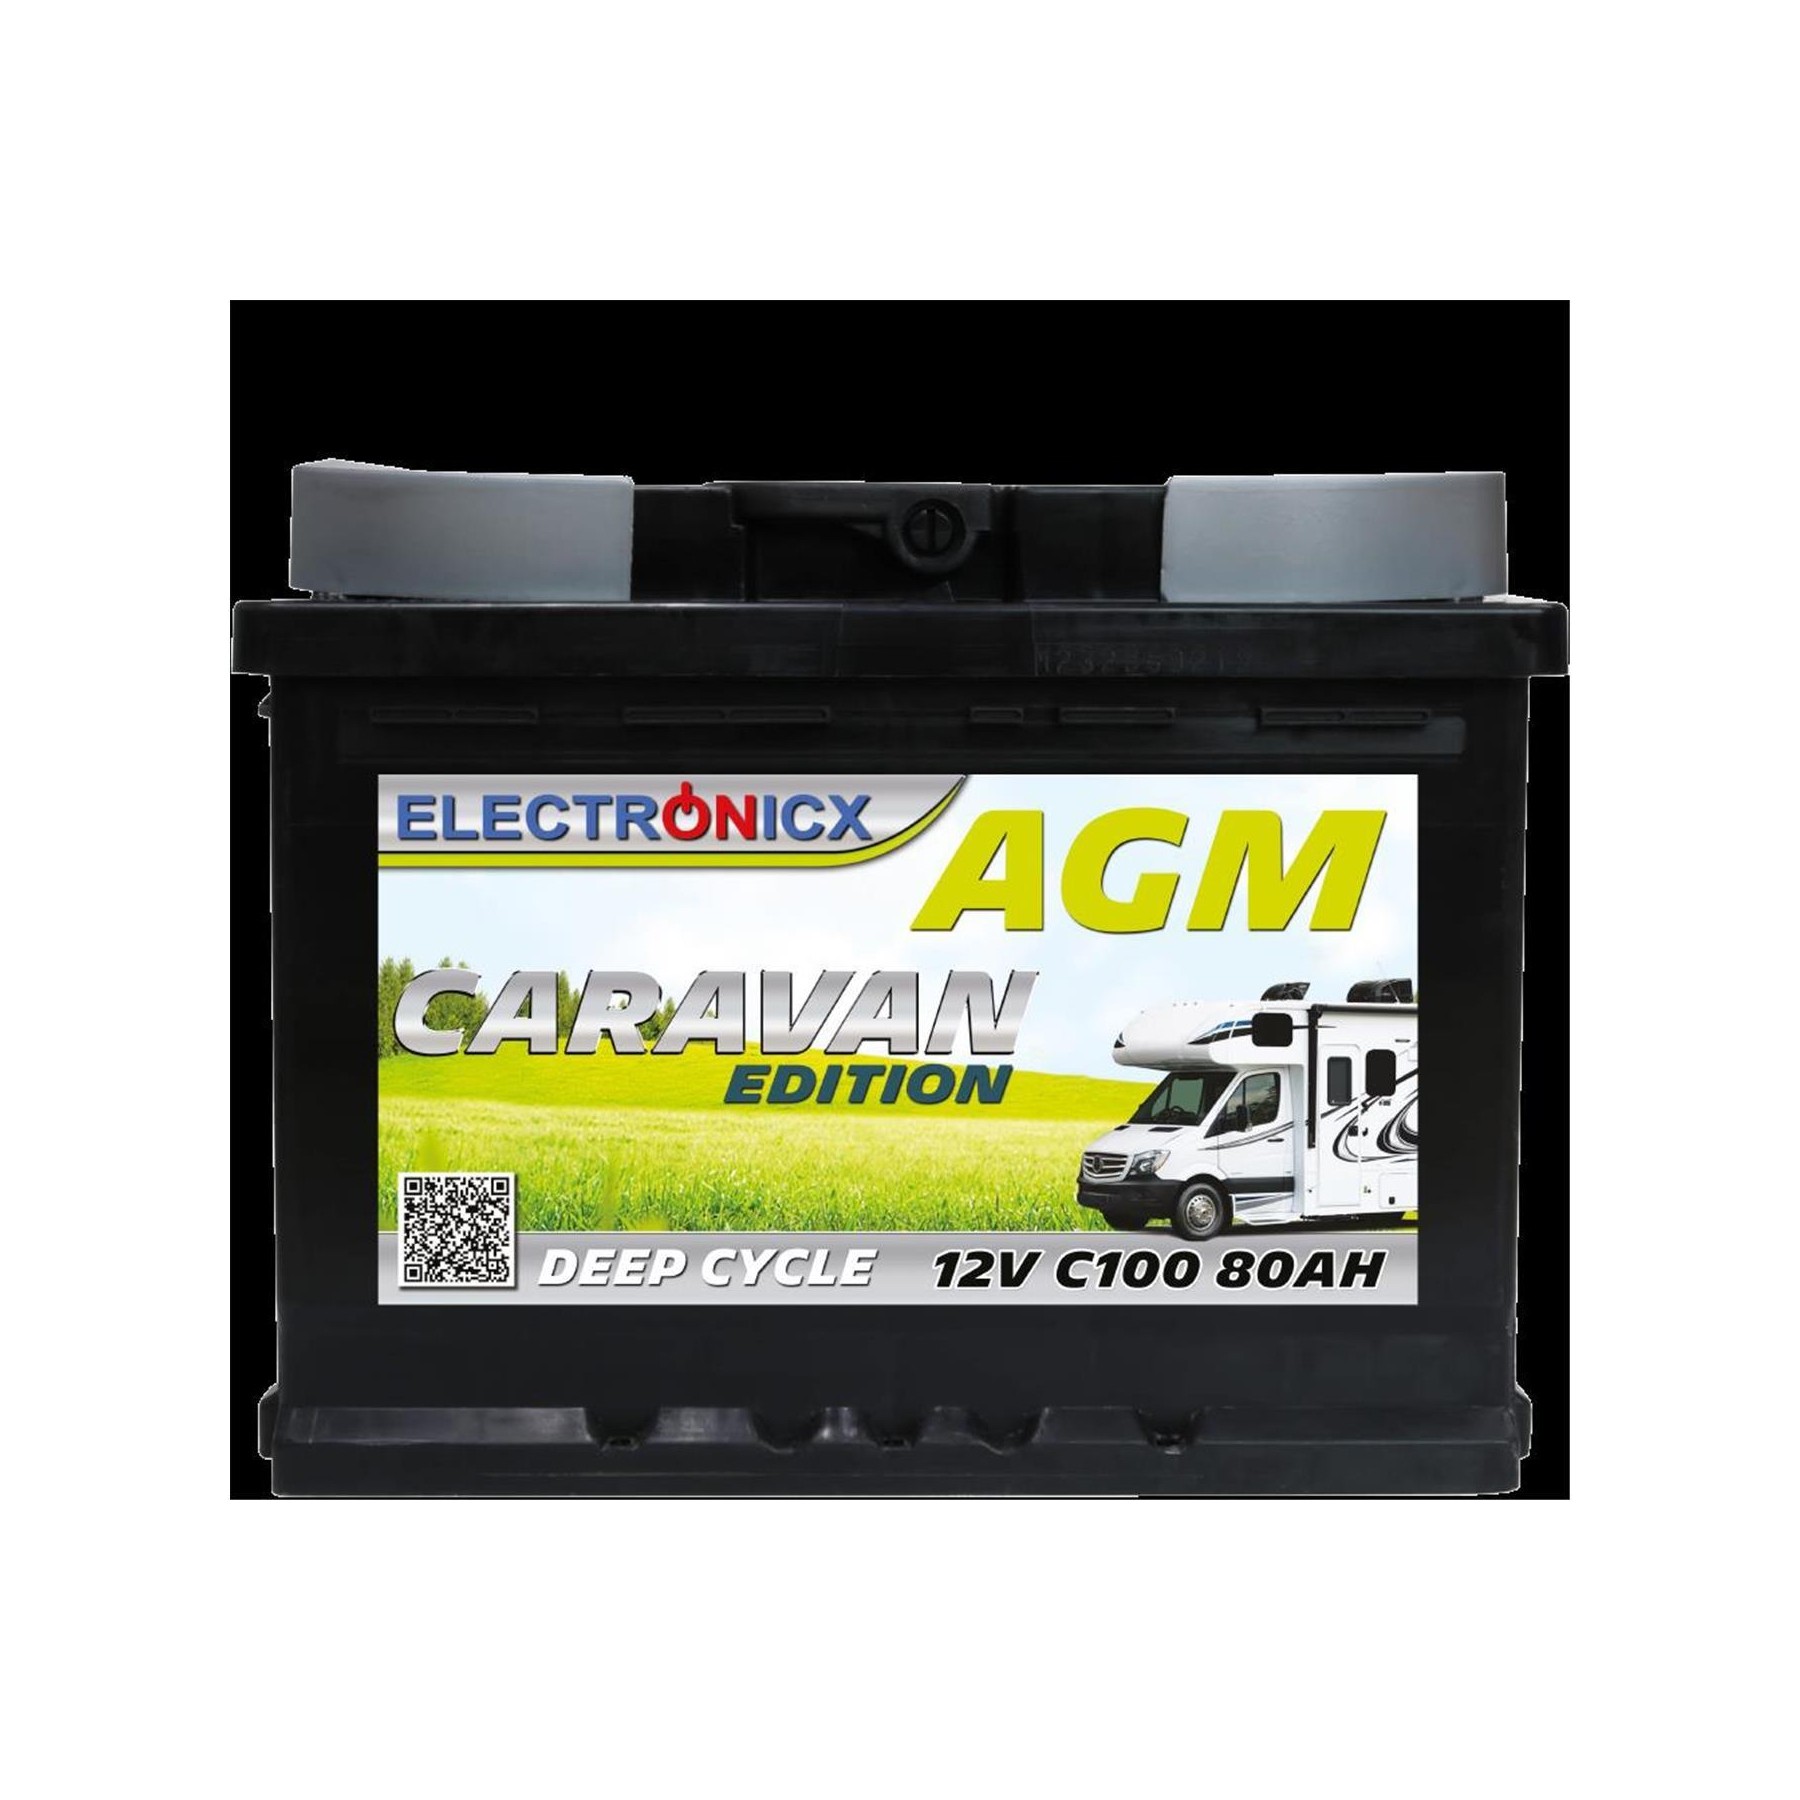 EXIDE Agm-Batterien für Service und Inbetriebnahme 100Ah 140Ah 240Ah -  Batterien - MTO Nautica Store